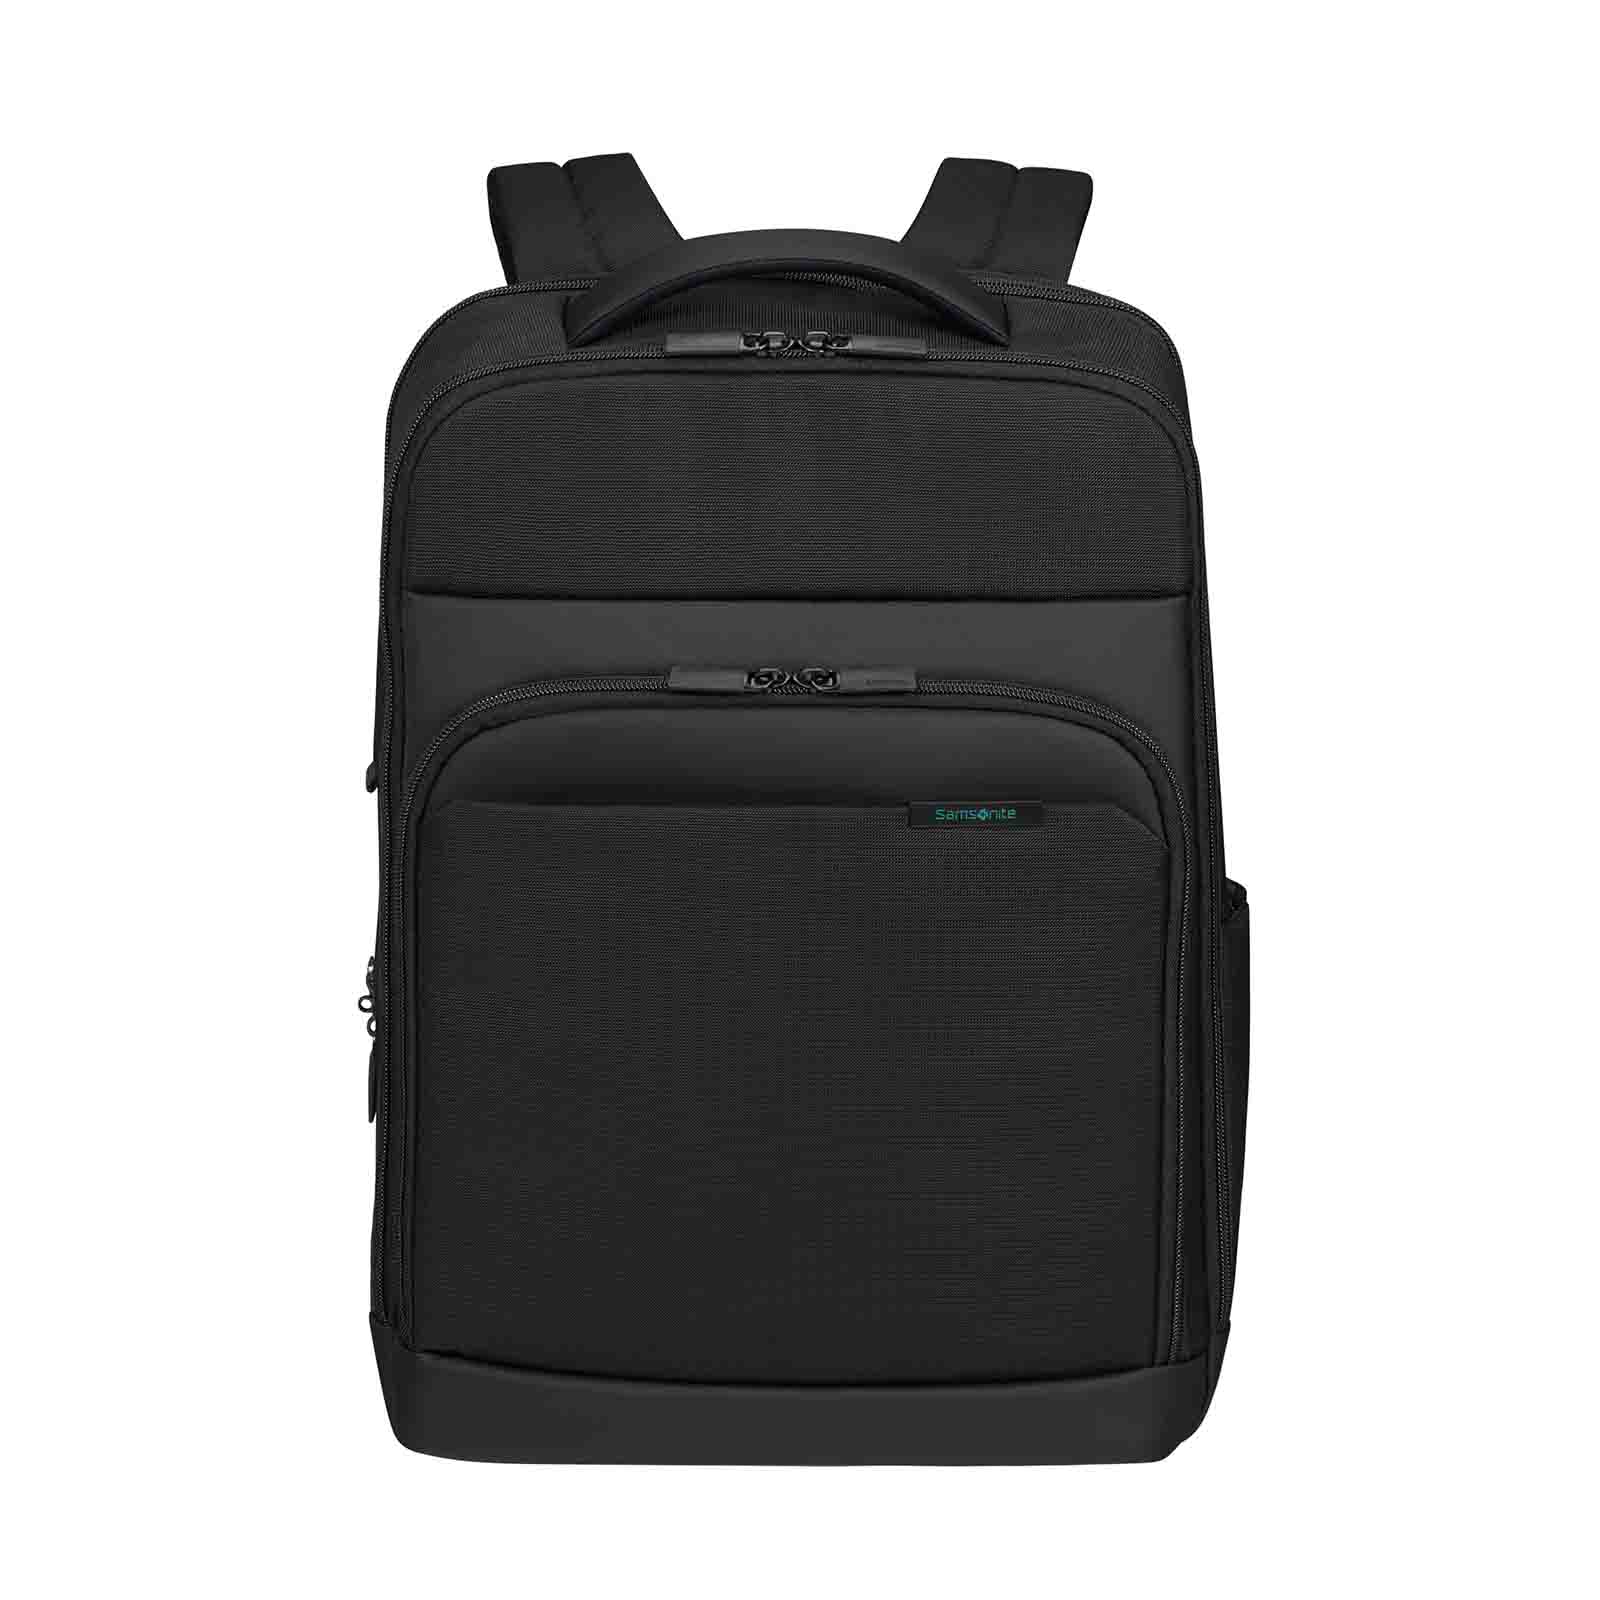 Samsonite-Mysight-17-Inch-Laptop-Backpack-Black-Front